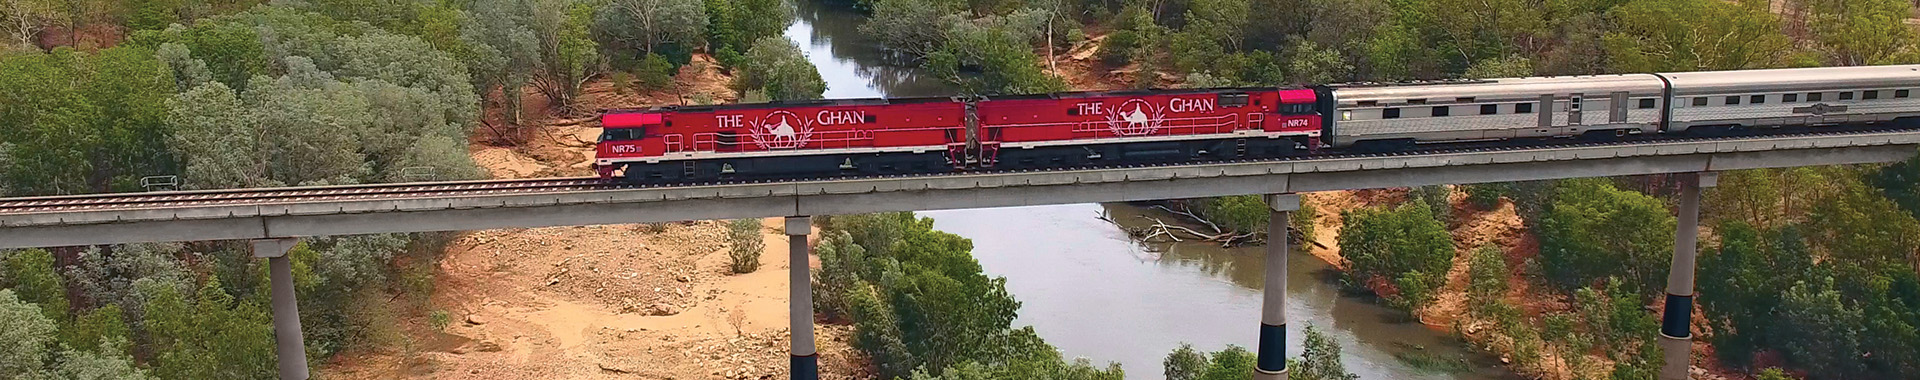 train travel holidays in australia